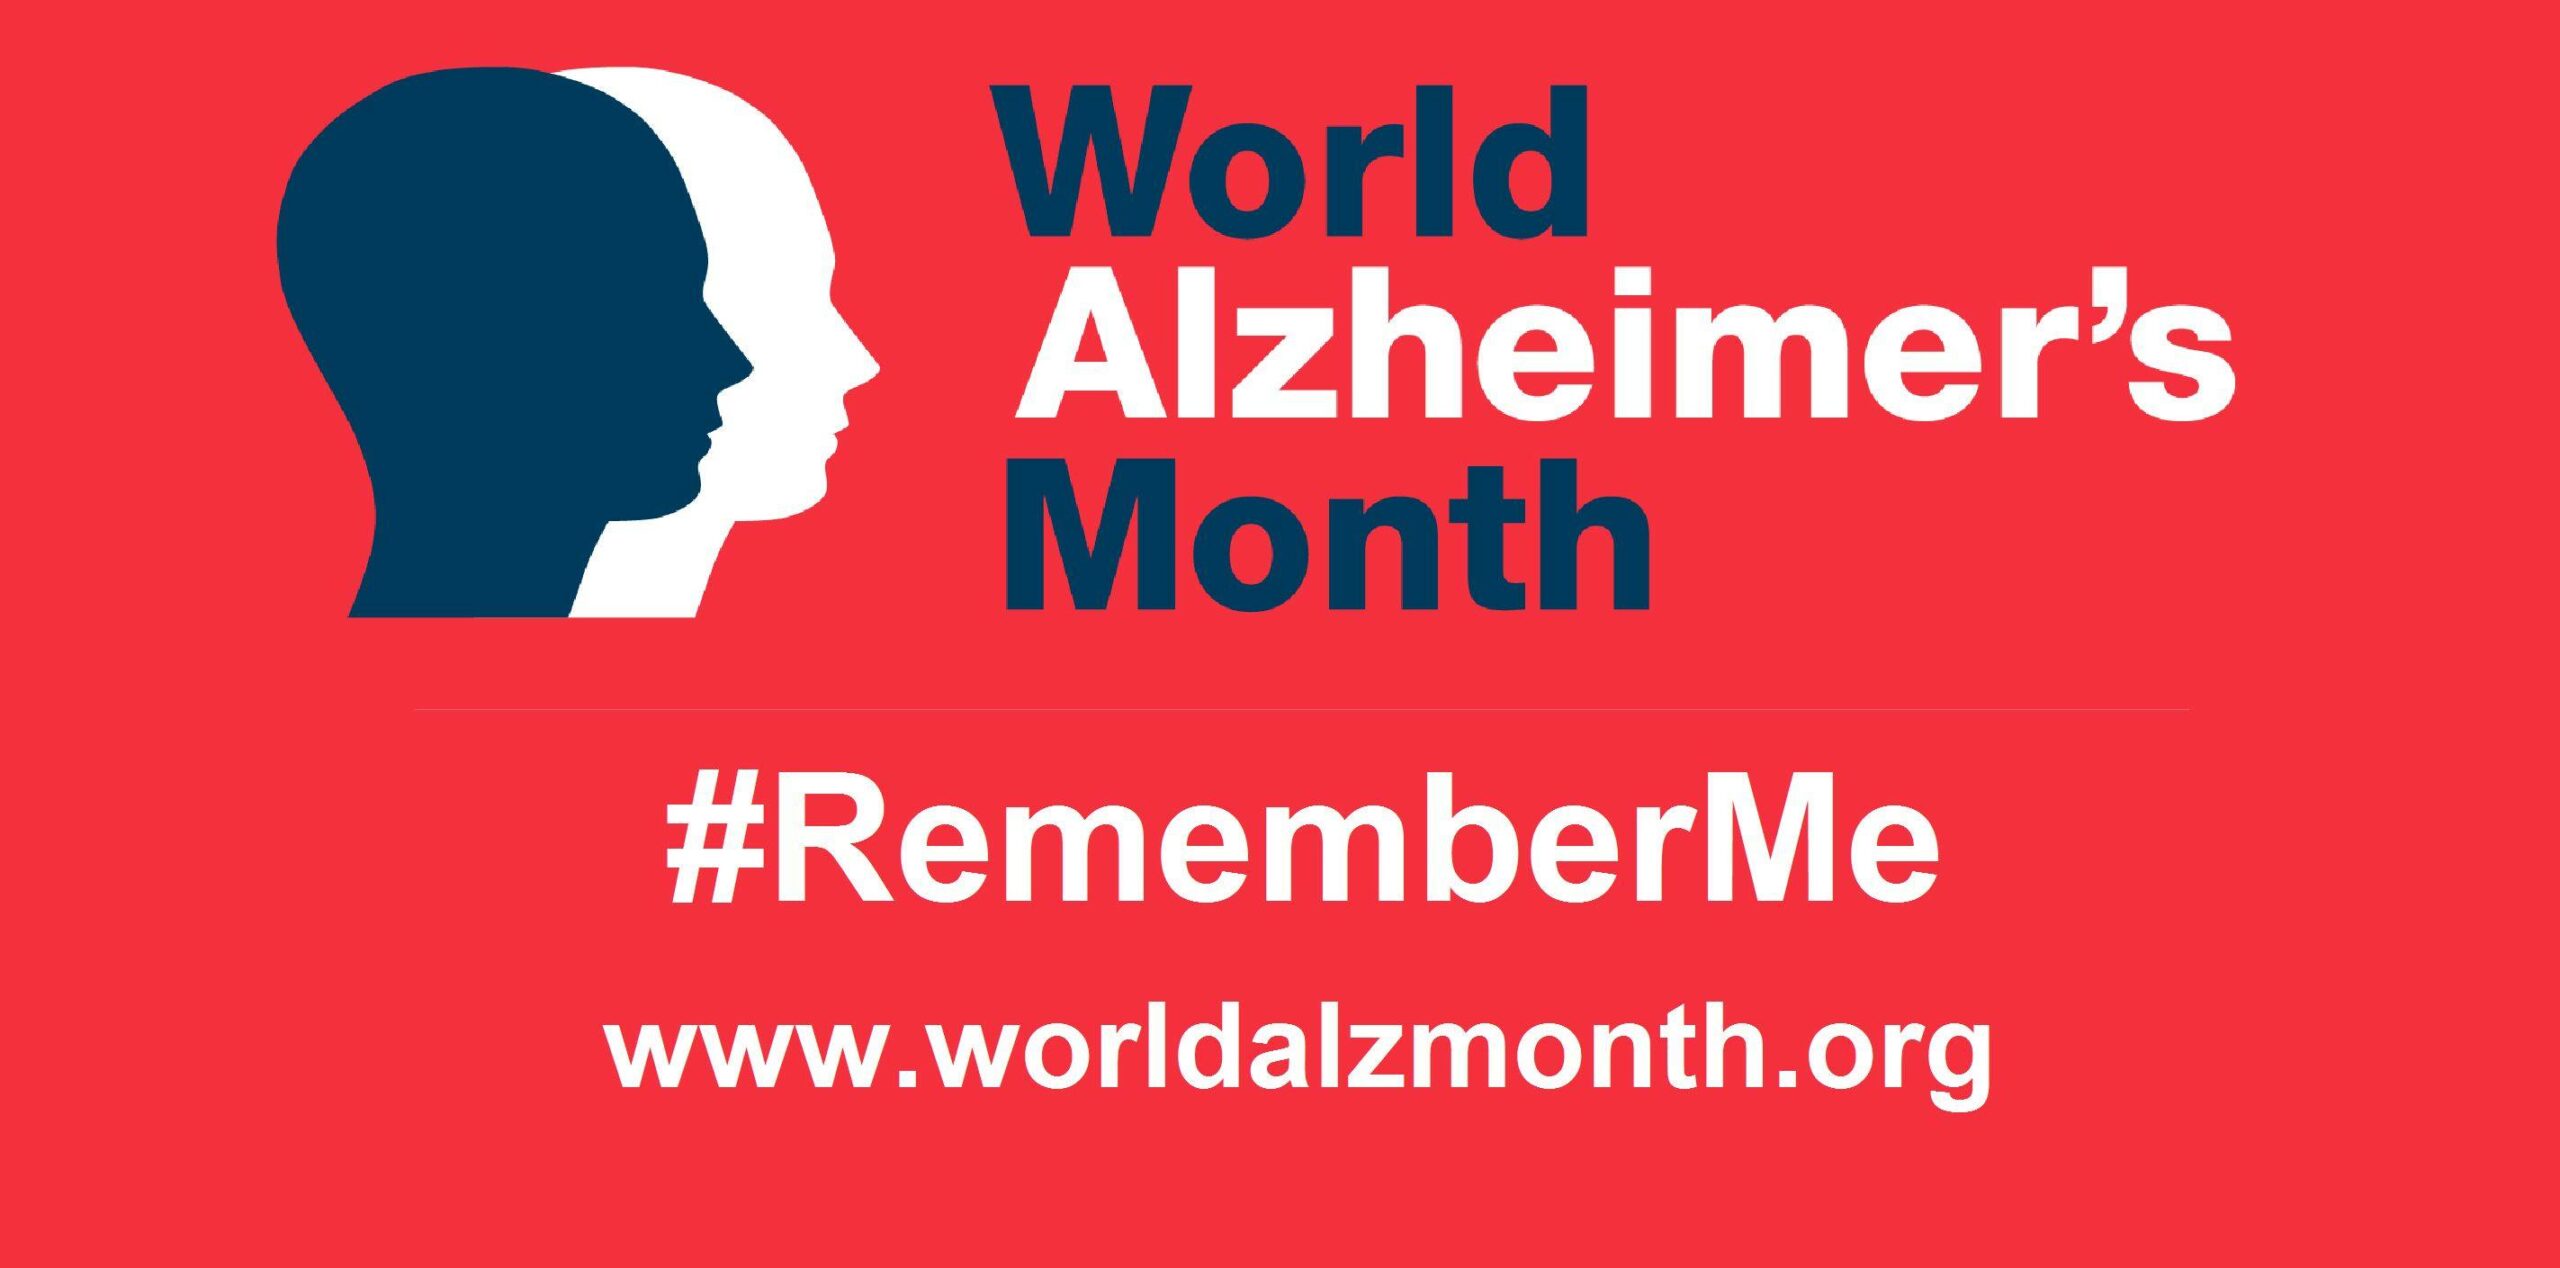 World Alzheimer’s Month:  Assistive Technology for Memory Loss